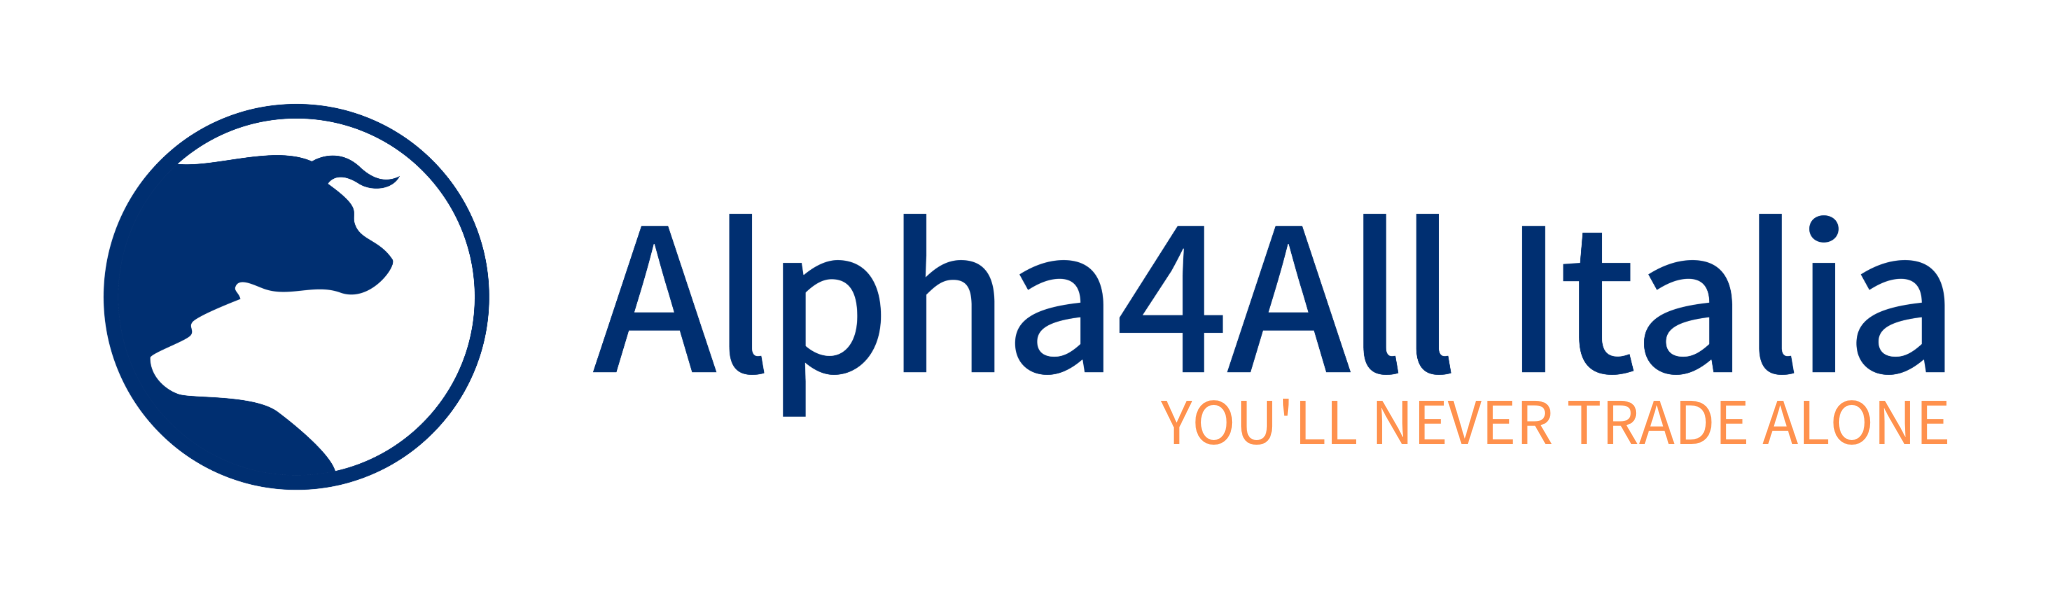 logo alpha4all